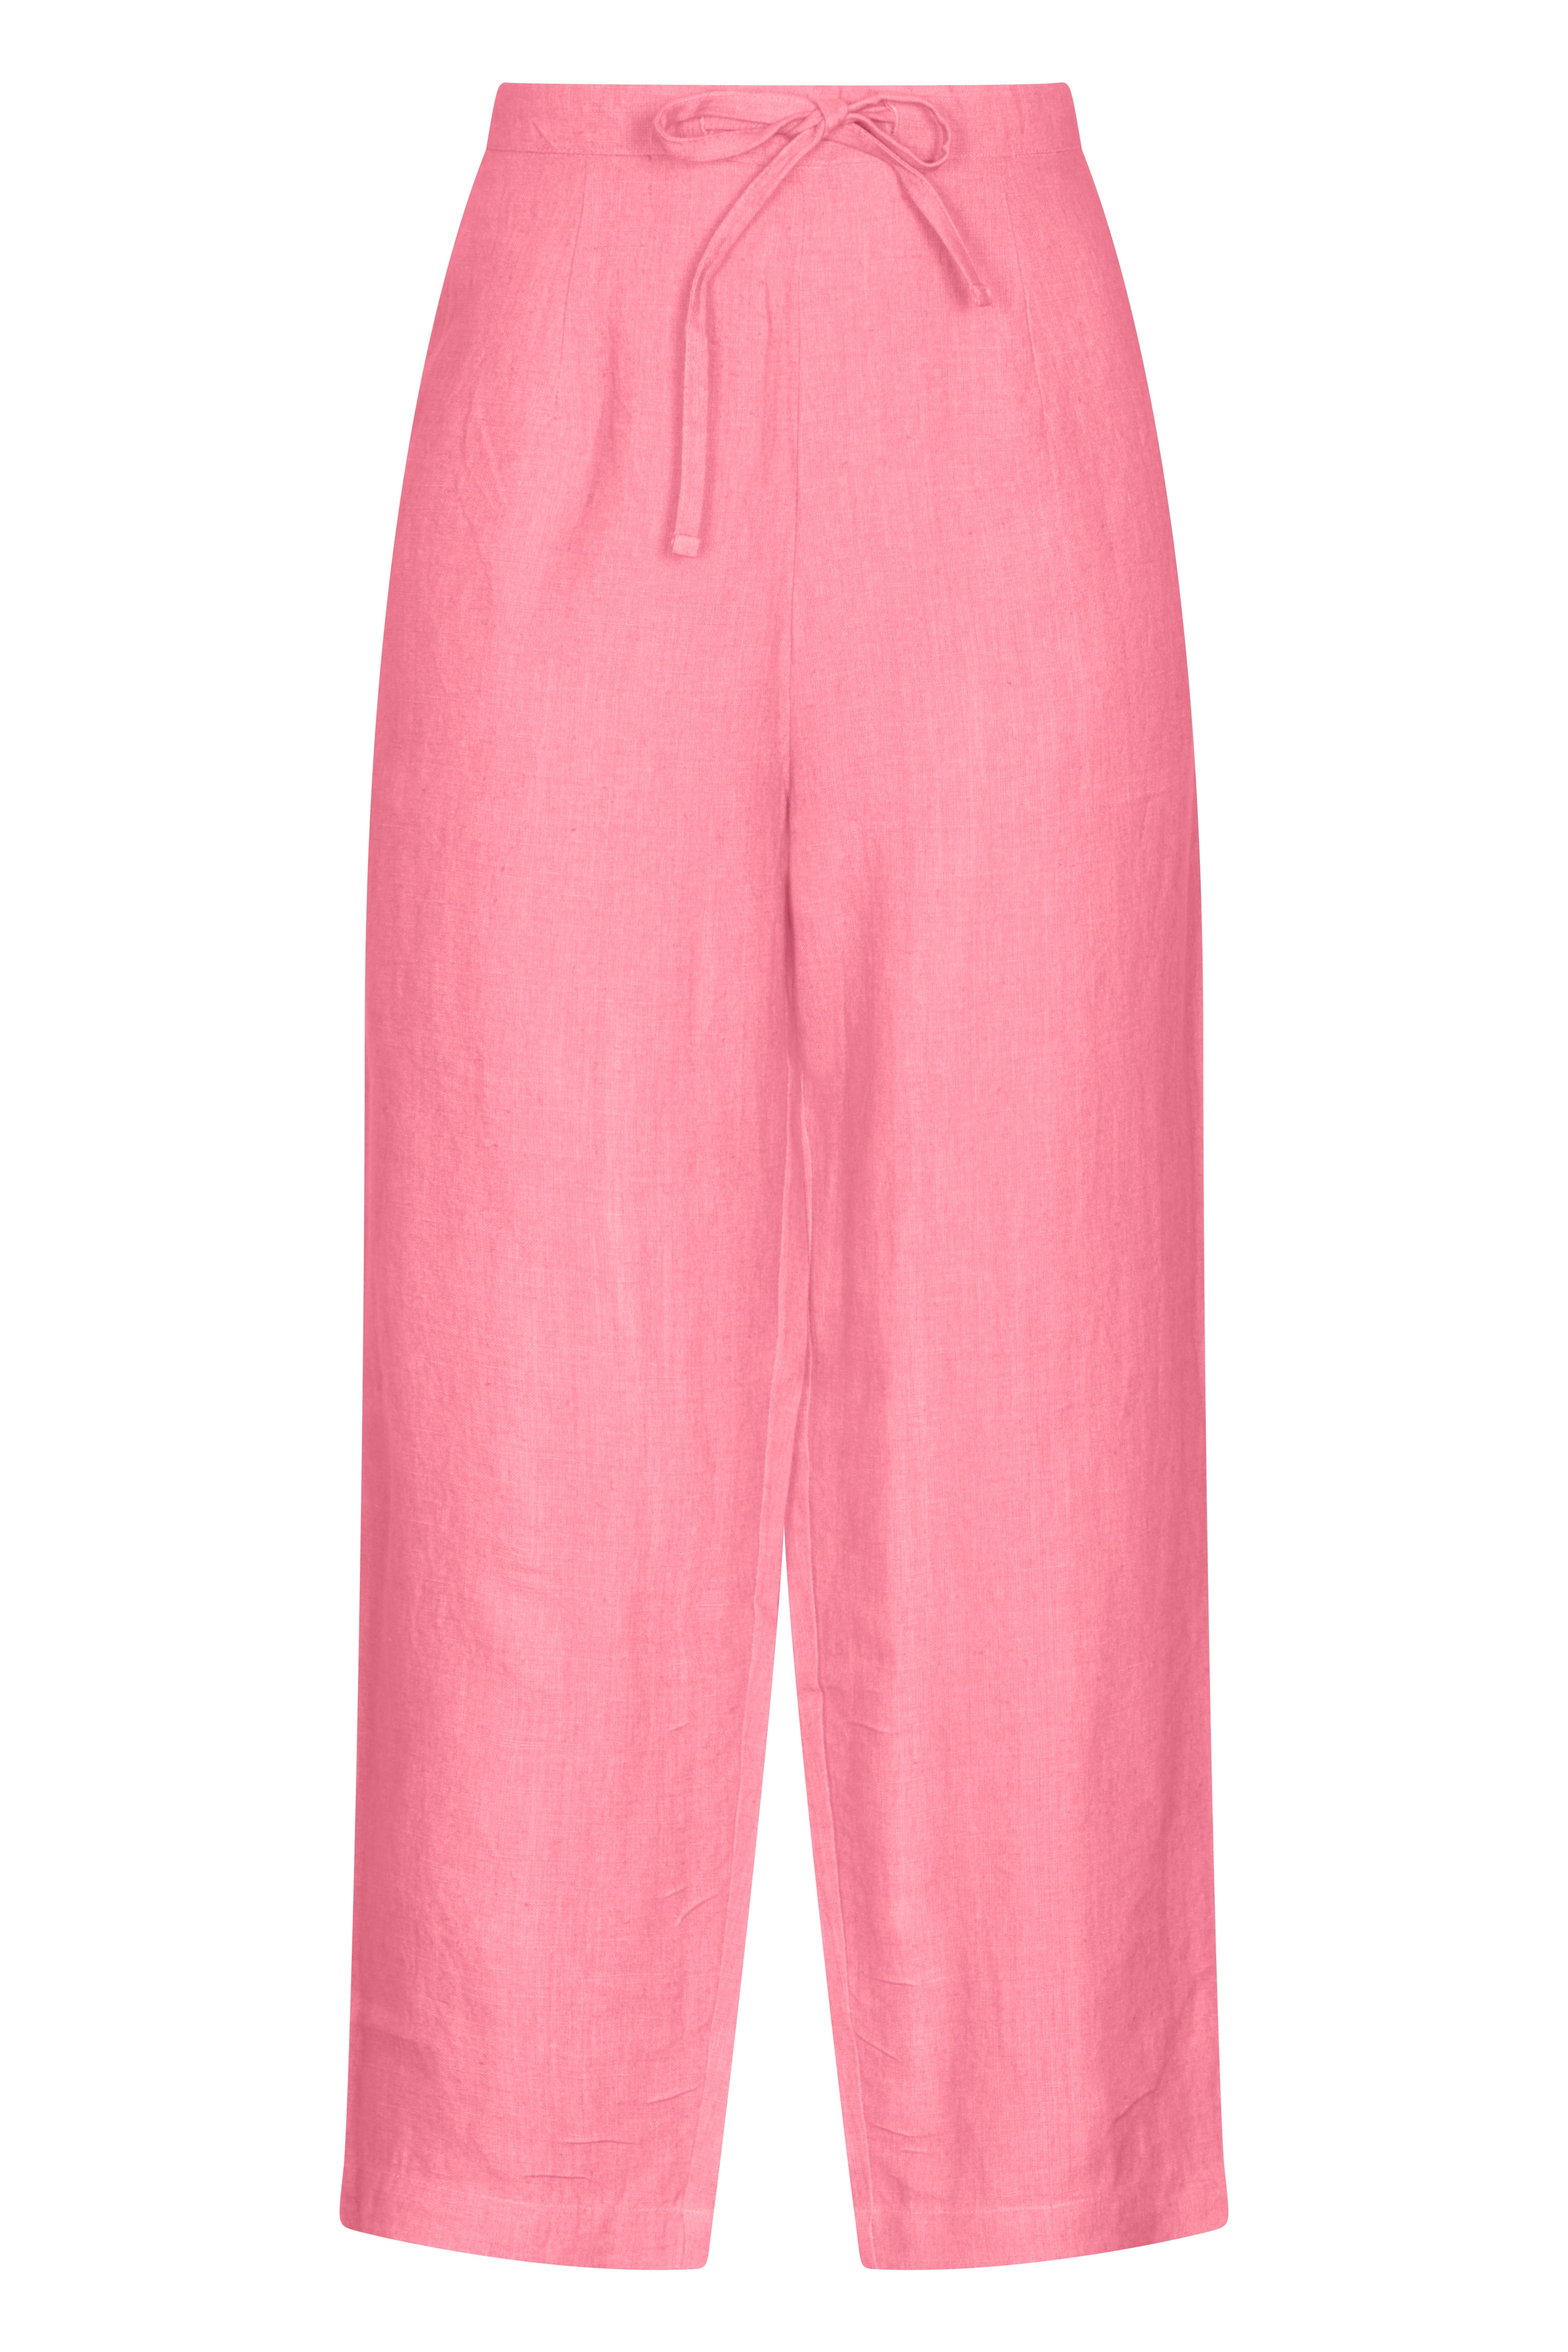 Life Style Plain Trouser Linen Blush Pink